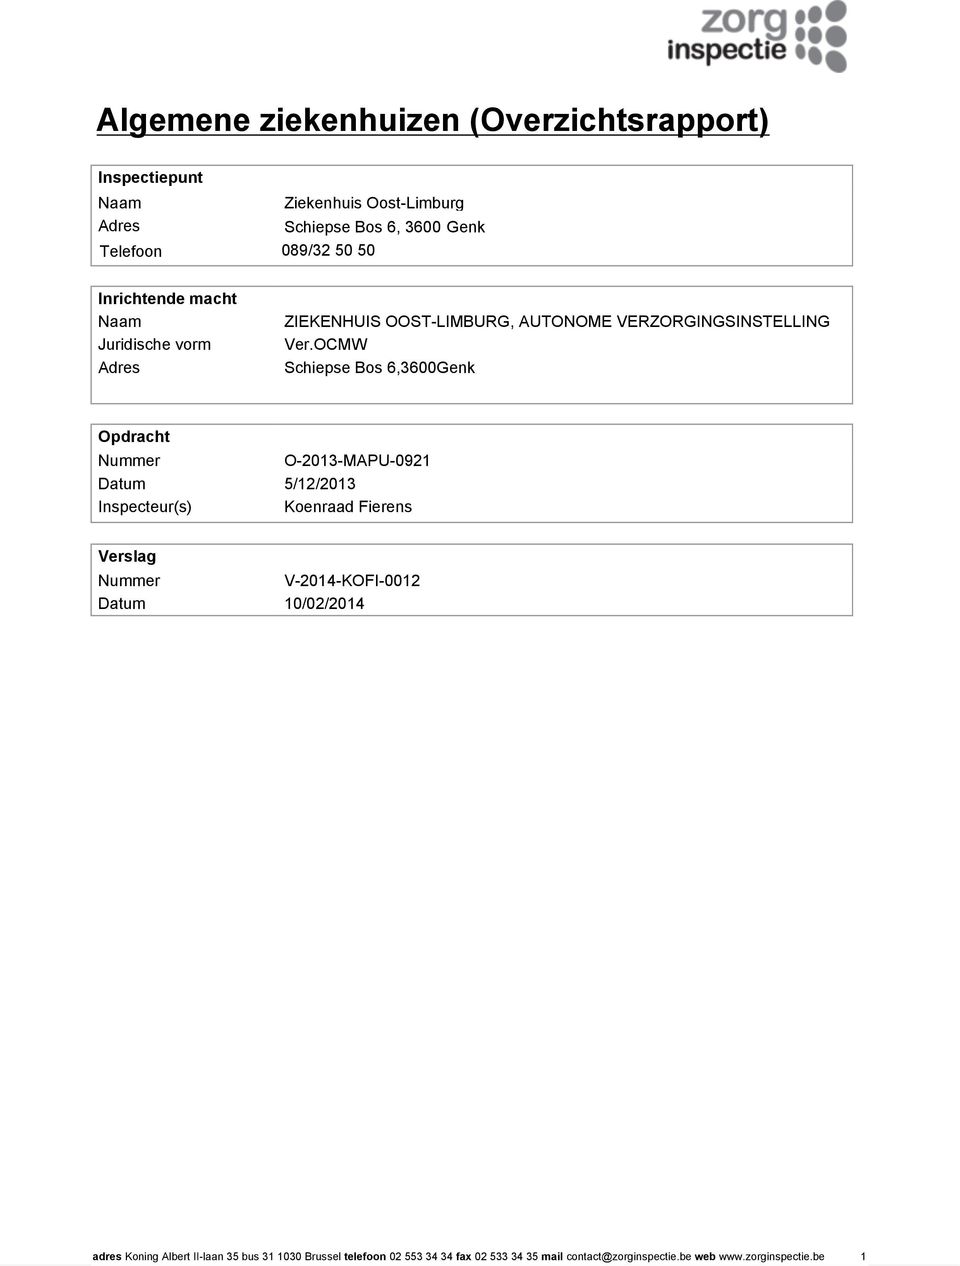 OCMW Schiepse Bos 6,3600Genk Opdracht Nummer O-2013-MAPU-0921 Datum 5/12/2013 Inspecteur(s) Koenraad Fierens Verslag Nummer